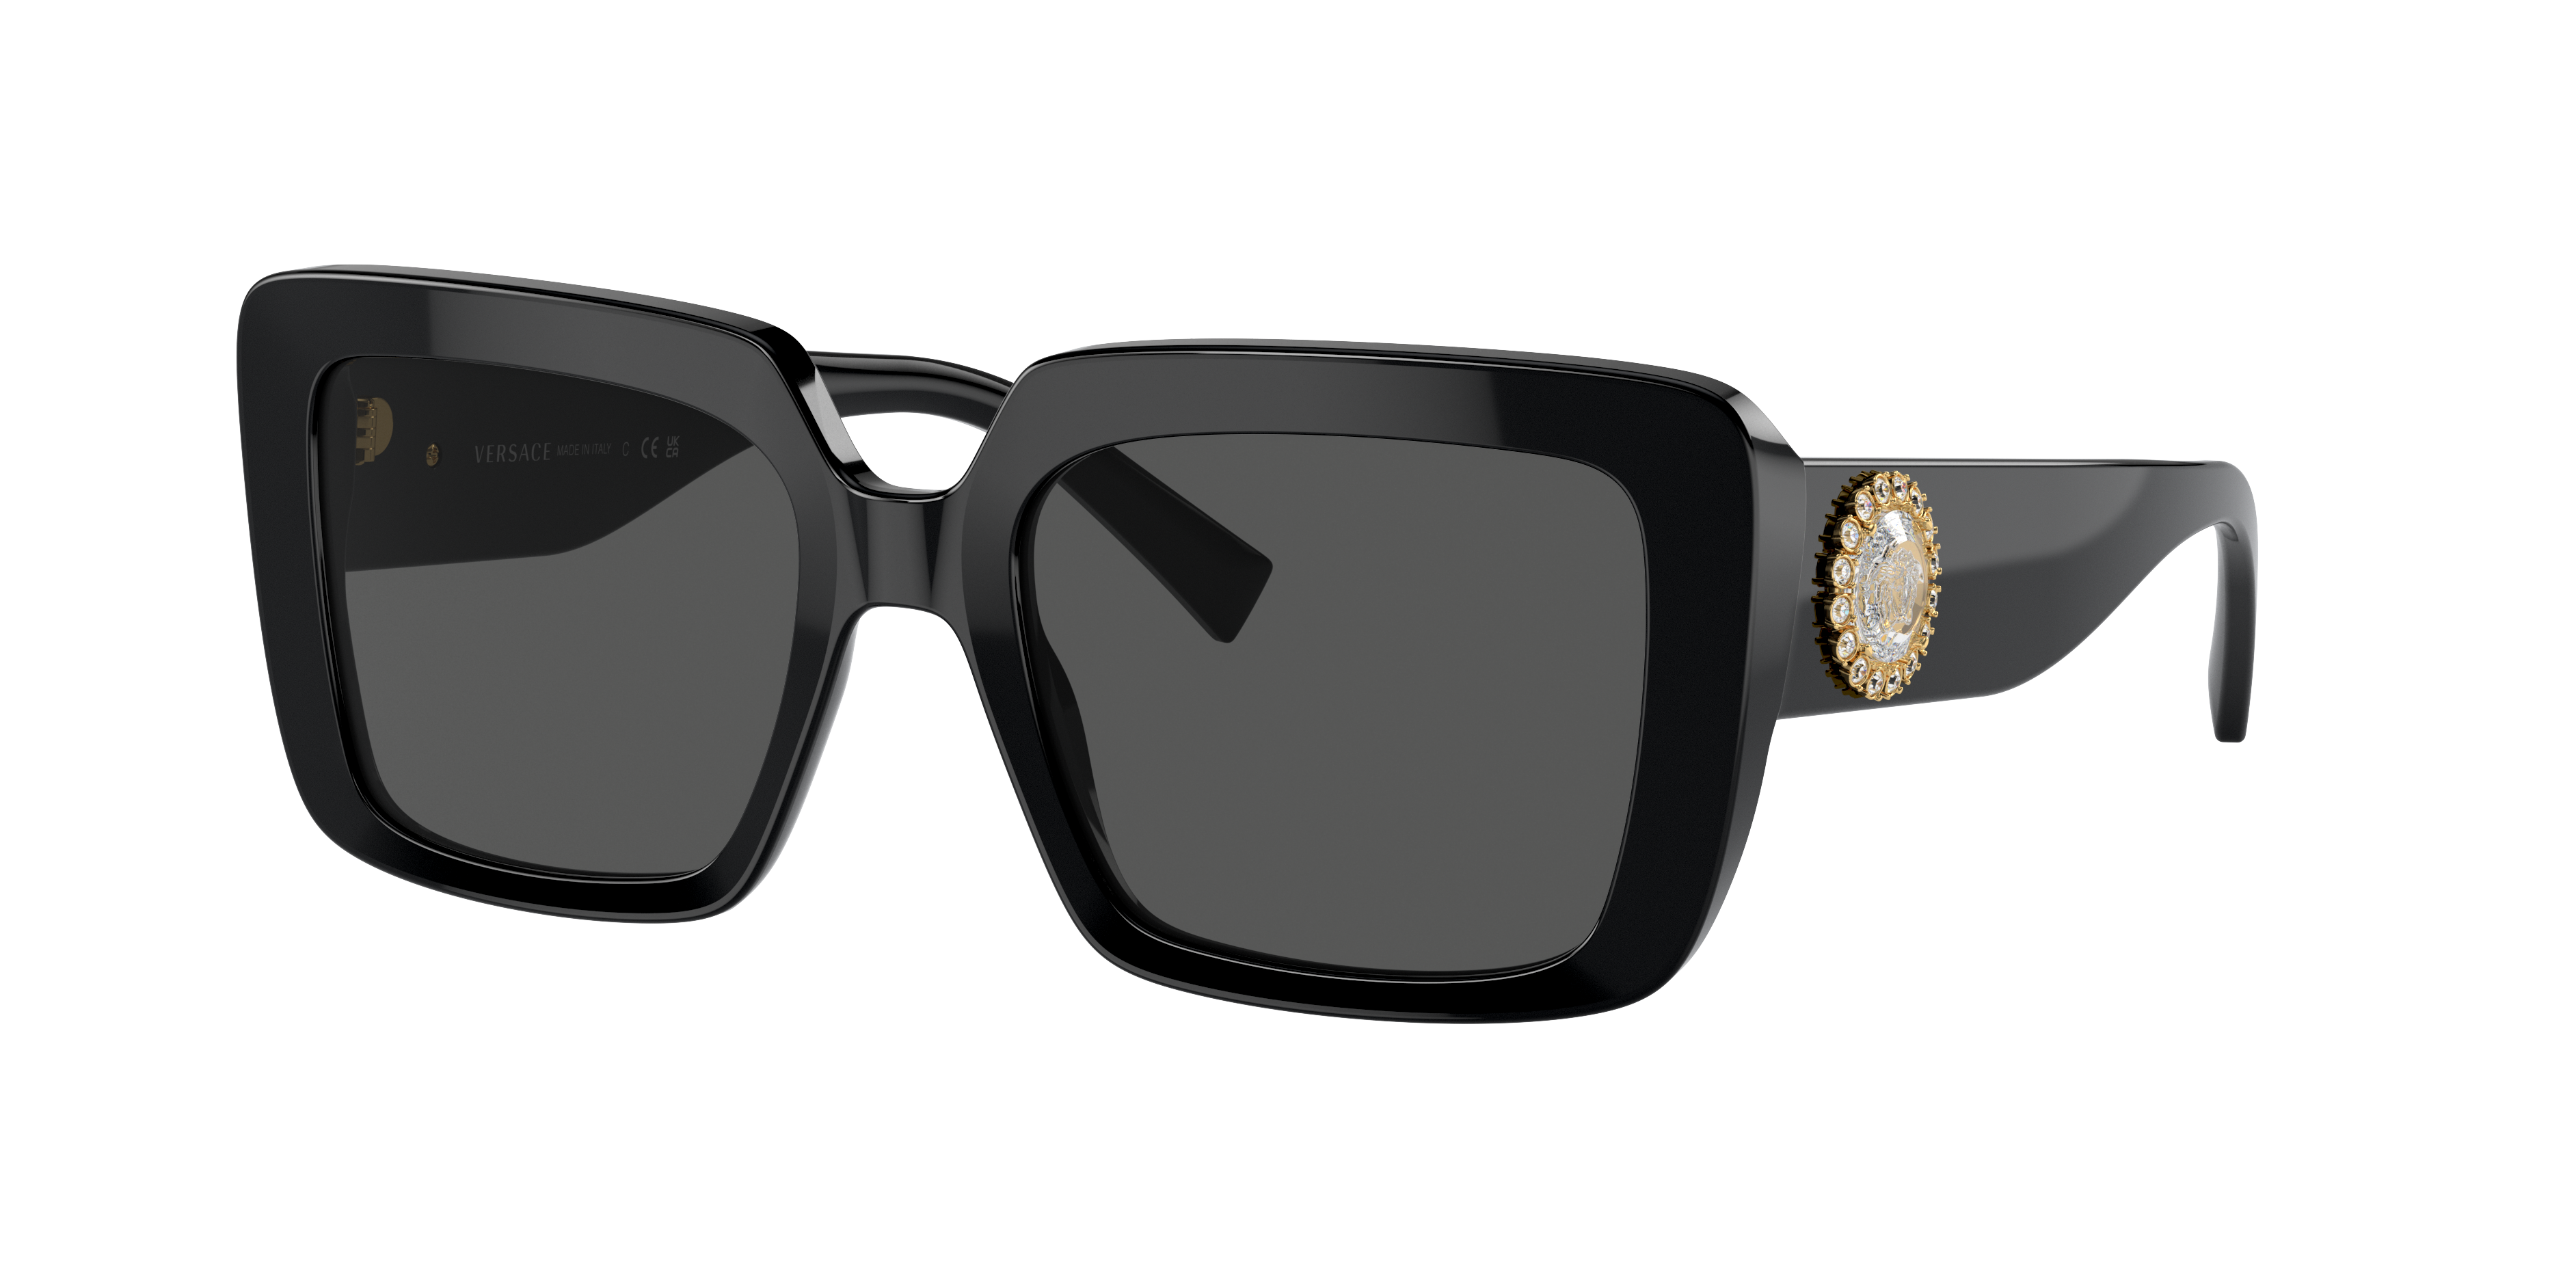 sunglasses versace price